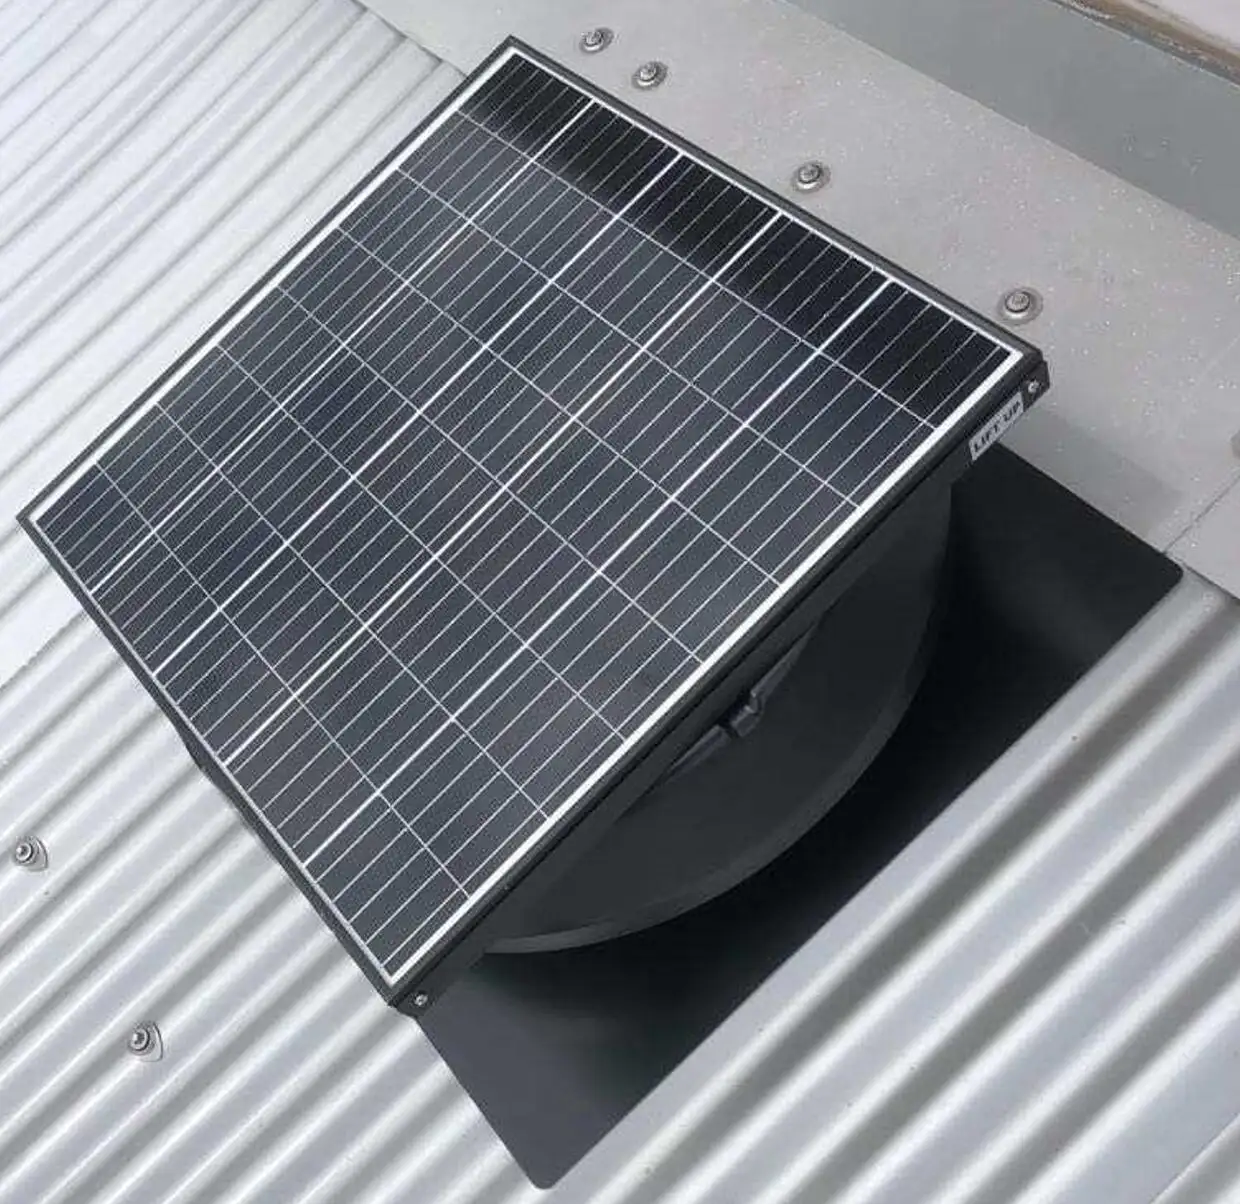 Free electrical pay DC powerful 60W 14 inch industrial roof exhaust fan kitchen hood solar extractor waterproof solar roof fan